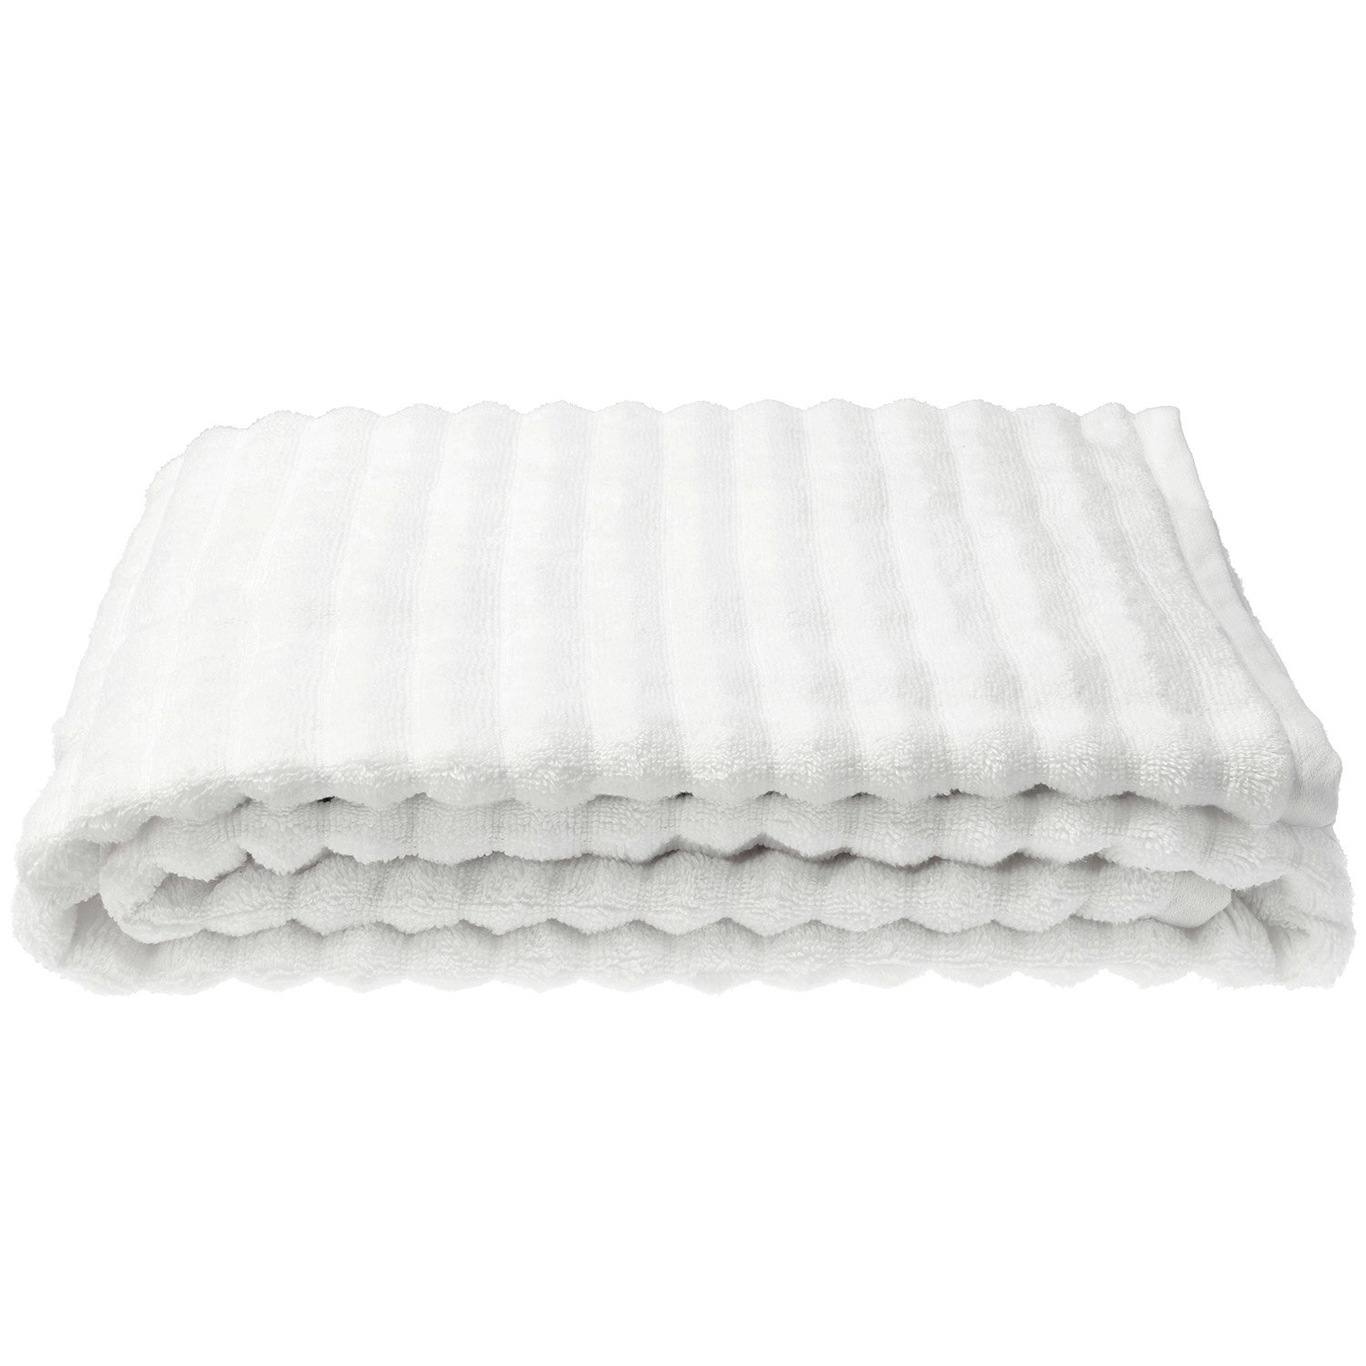 Inu Beach Towel 180x100 cm, White